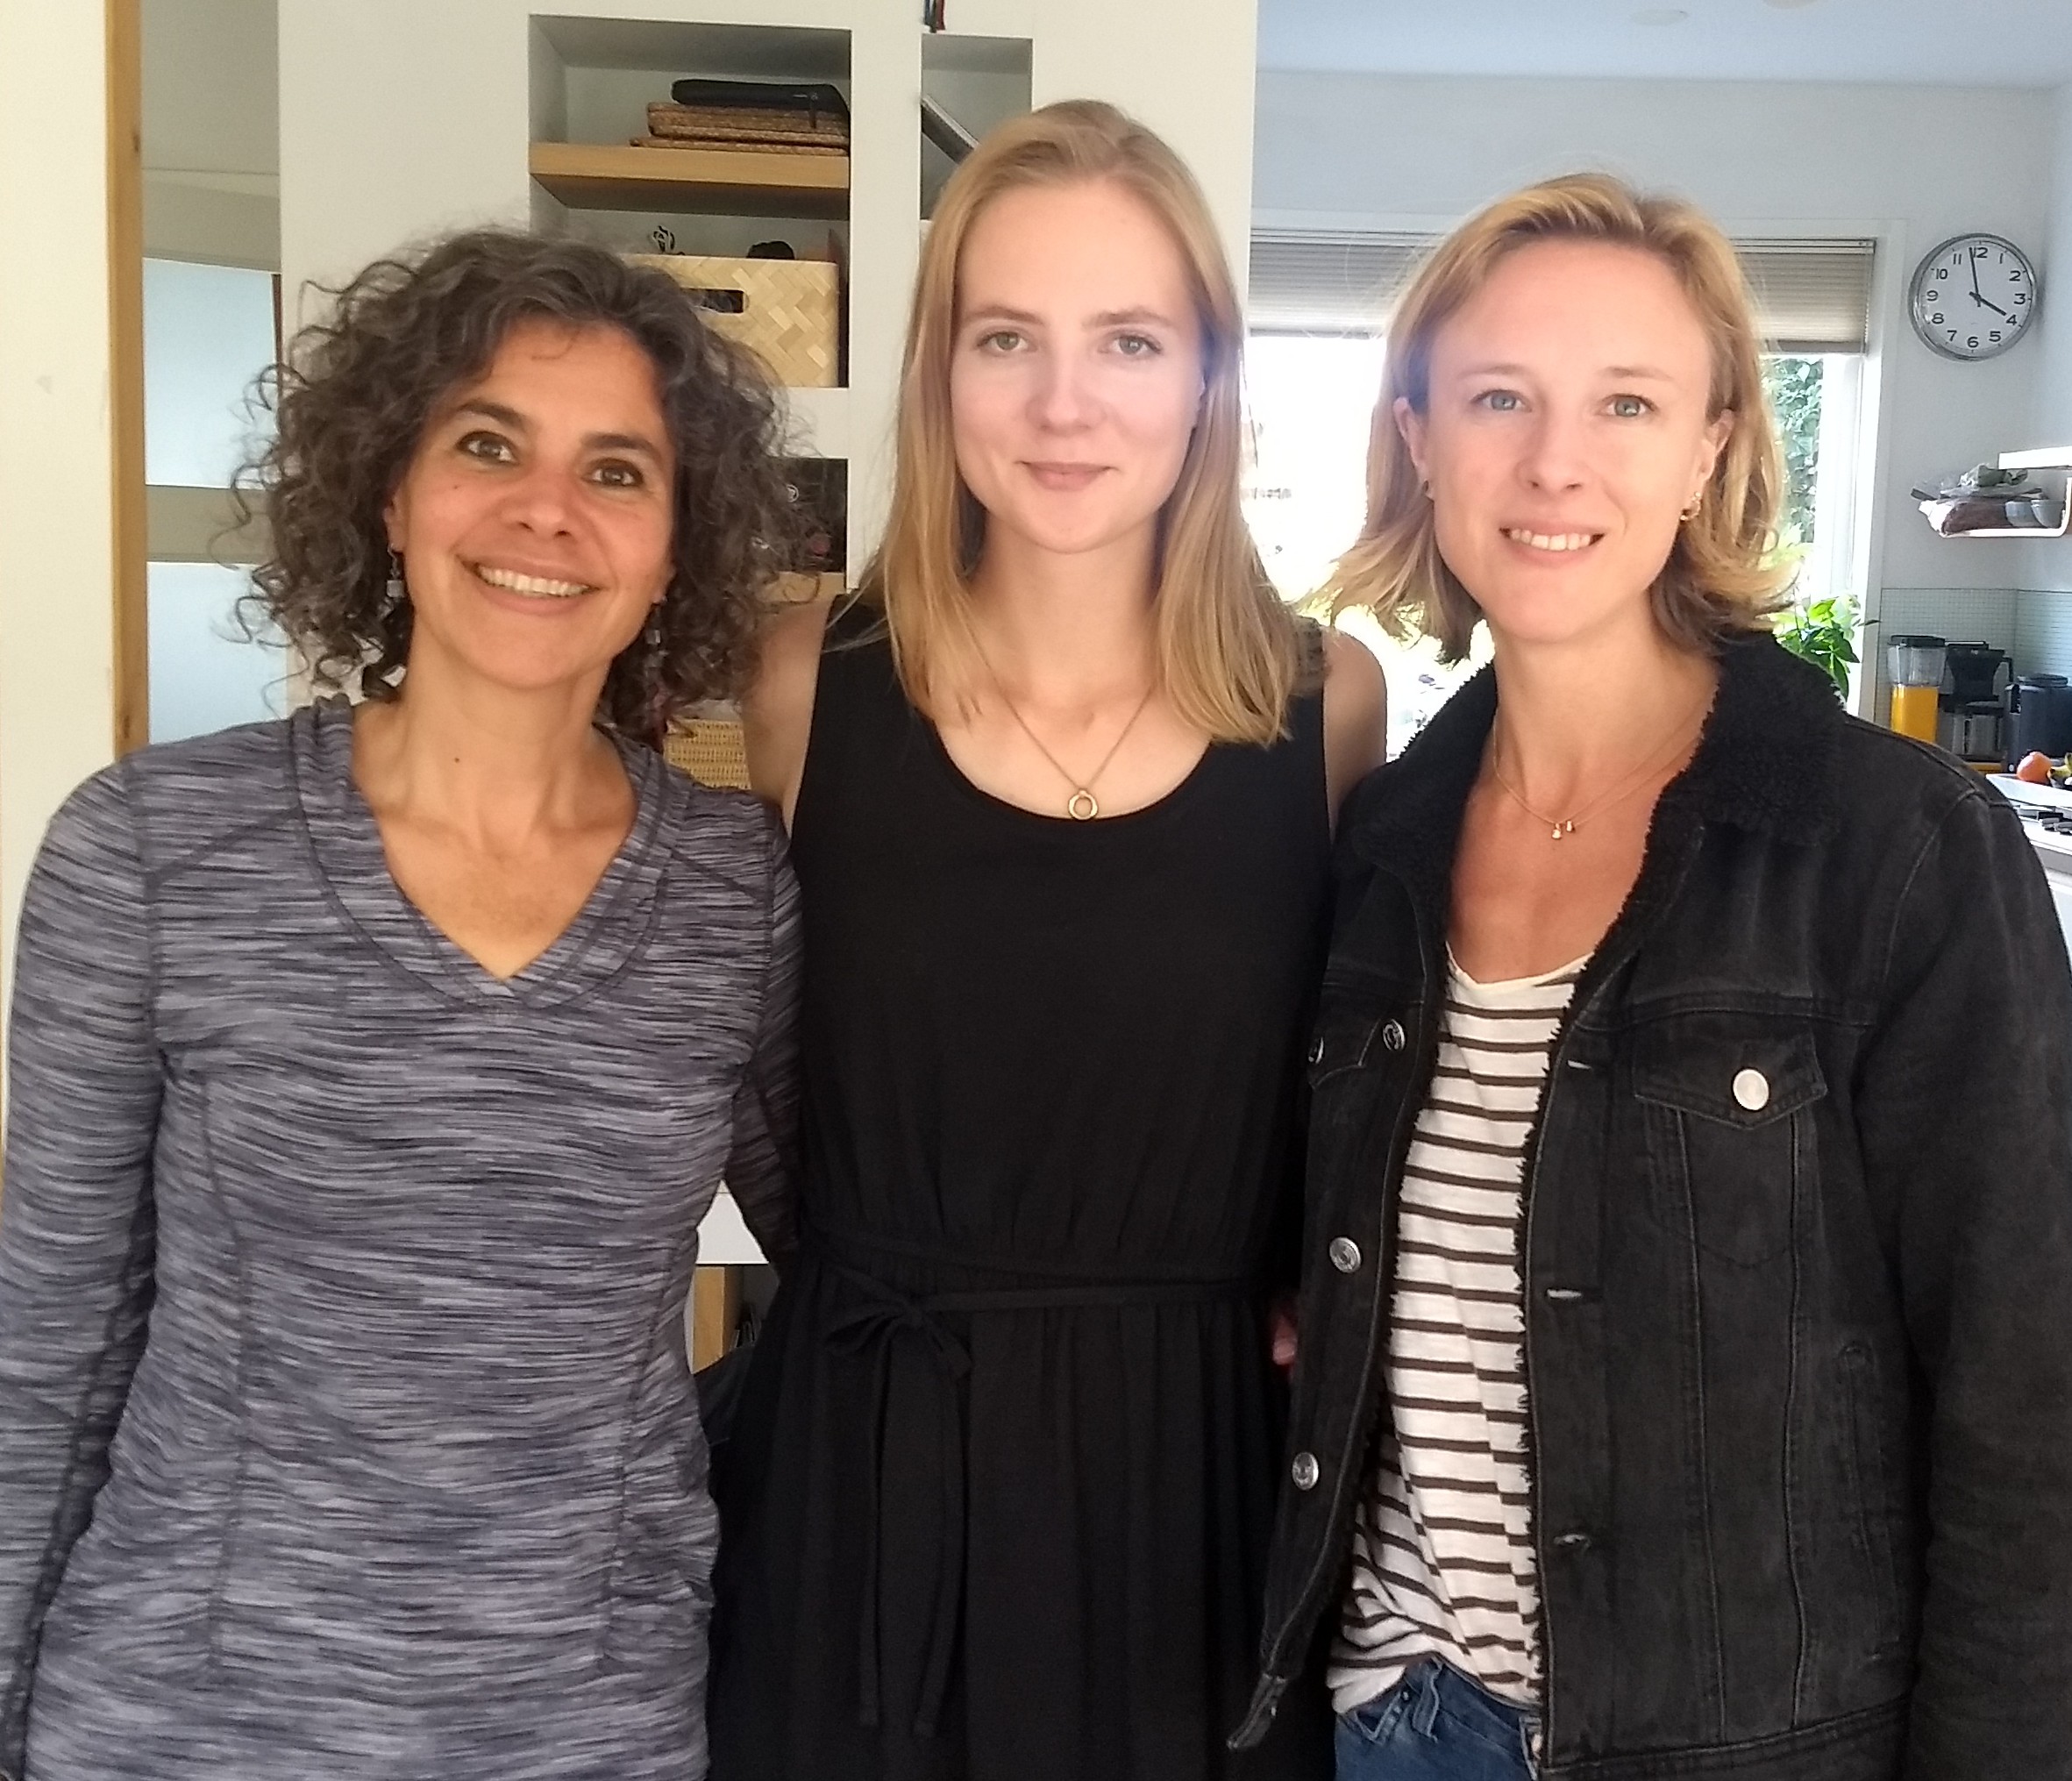 Our board members from left to right: Rudayna Abdo, Sara Lönegård, and Stephanie Fairbank